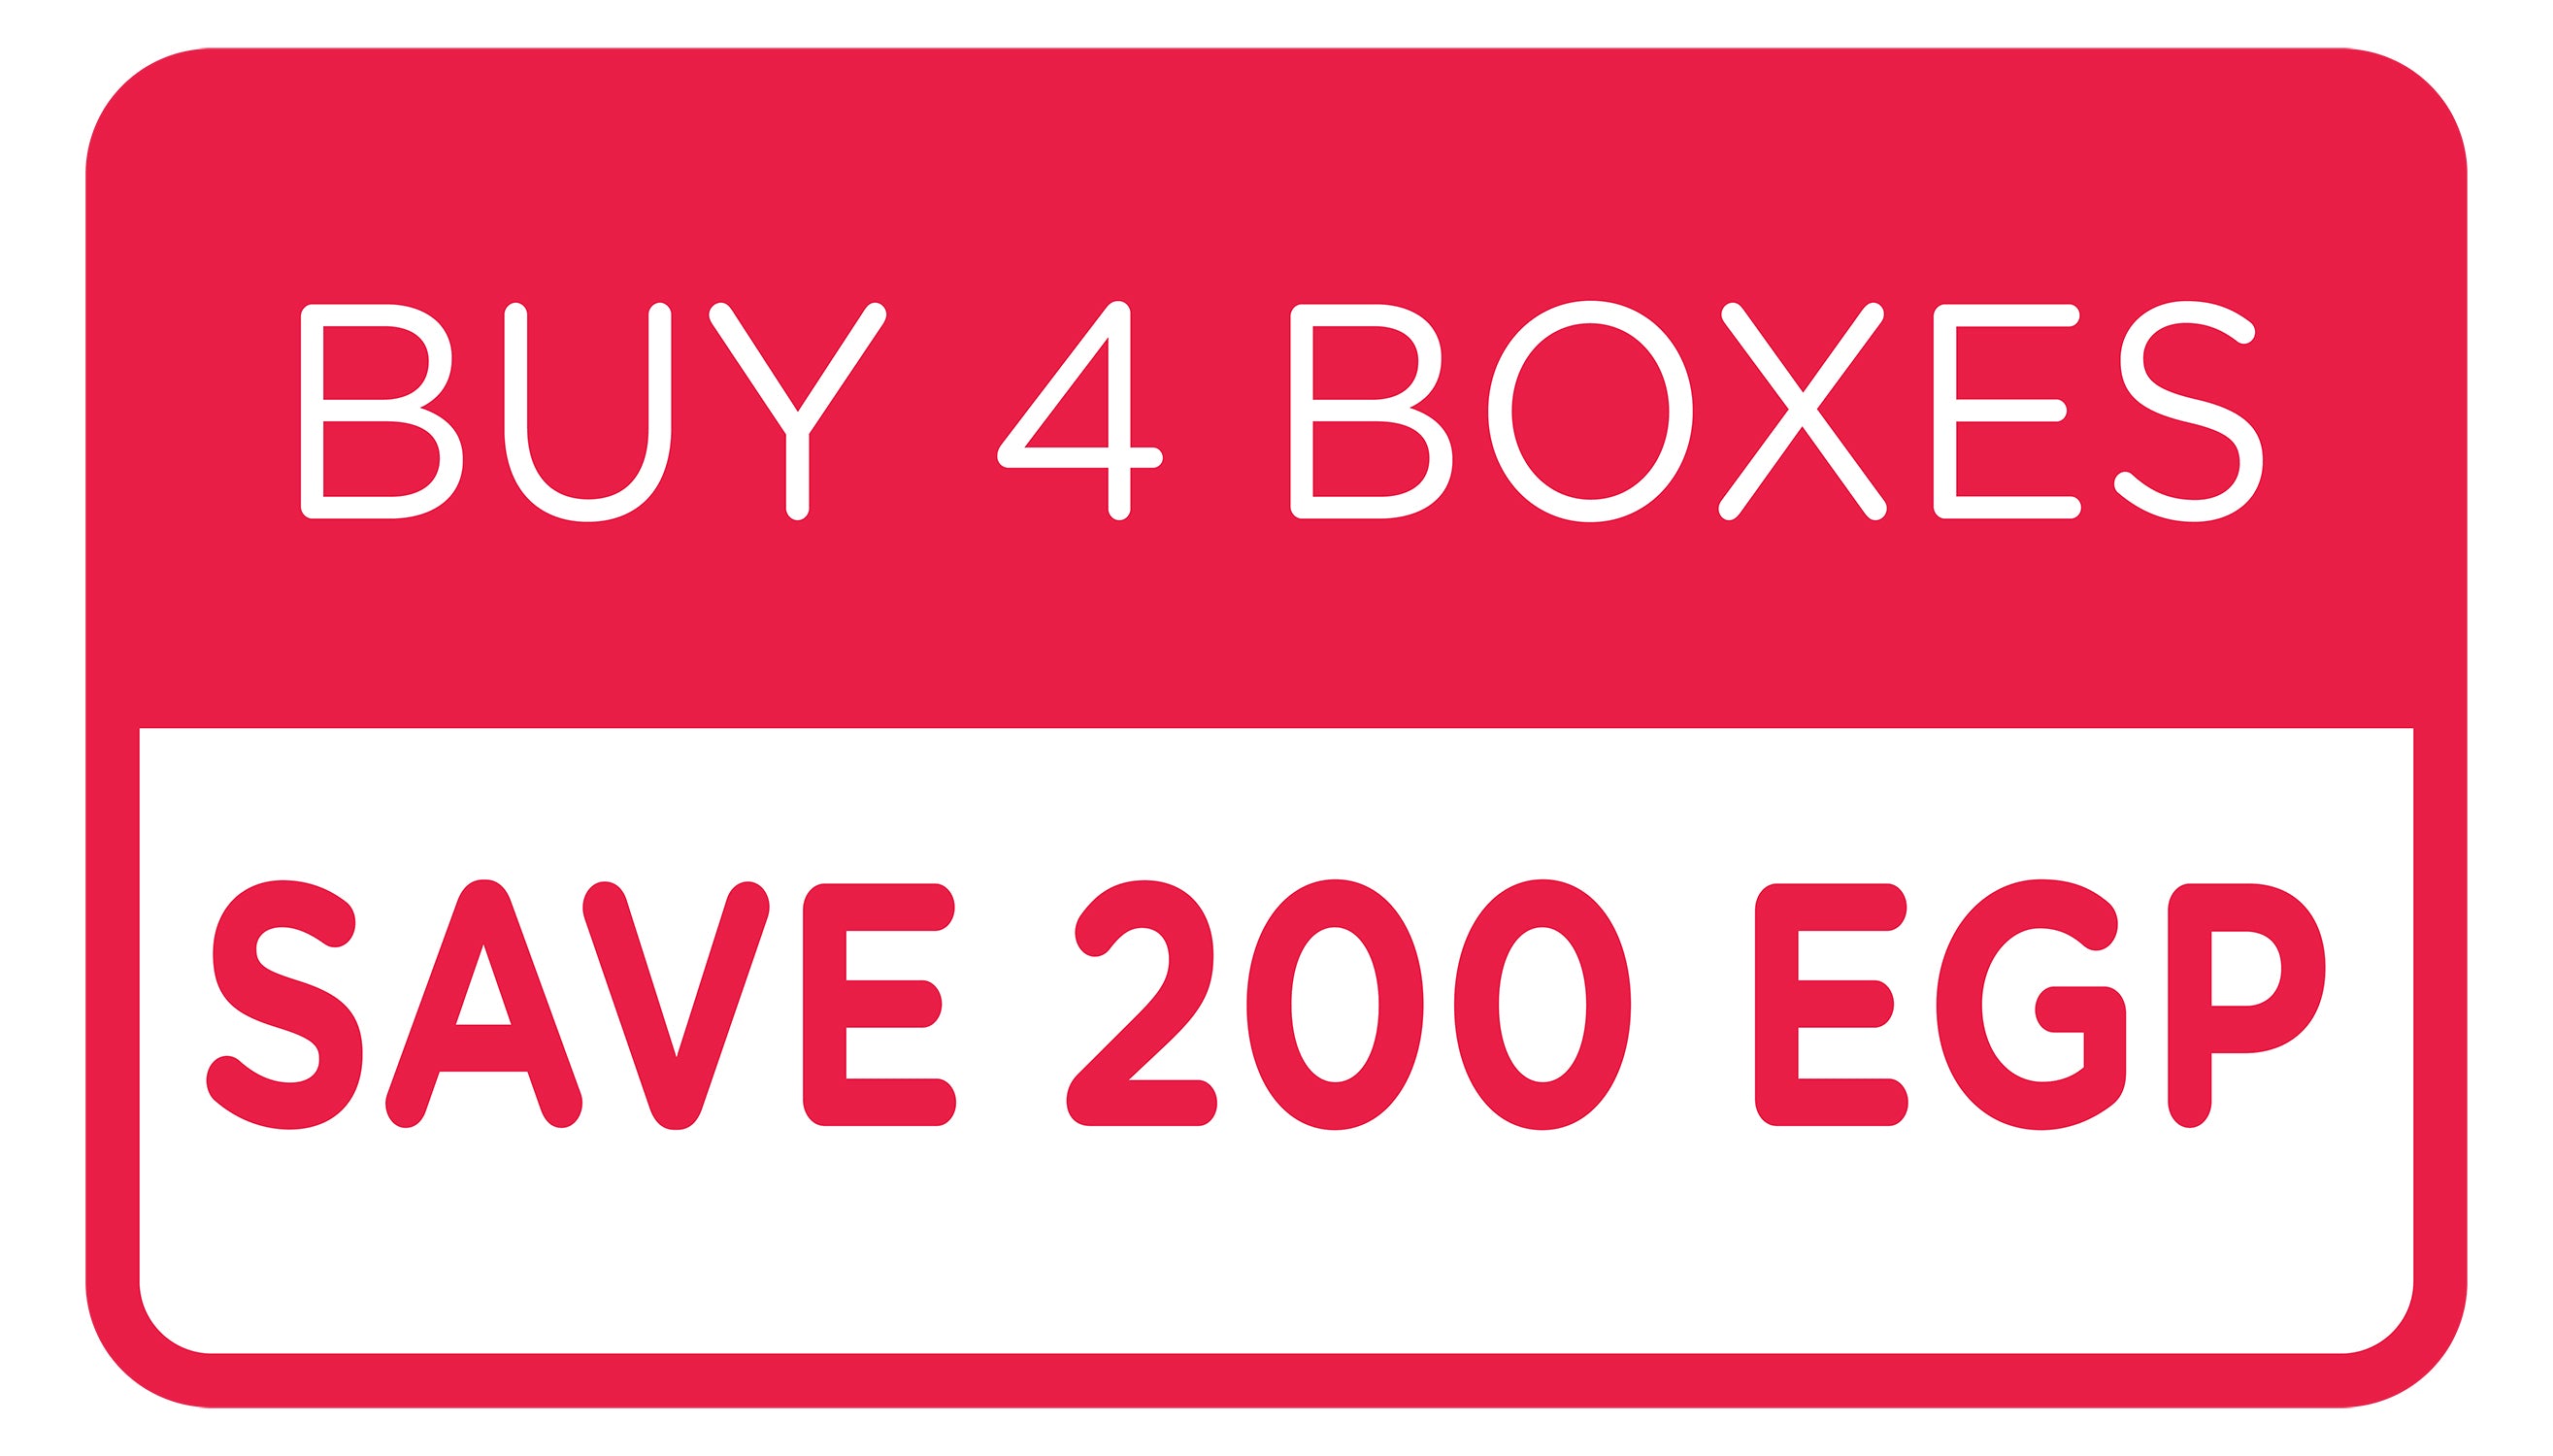 Buy 4 Boxes Save EGP 200